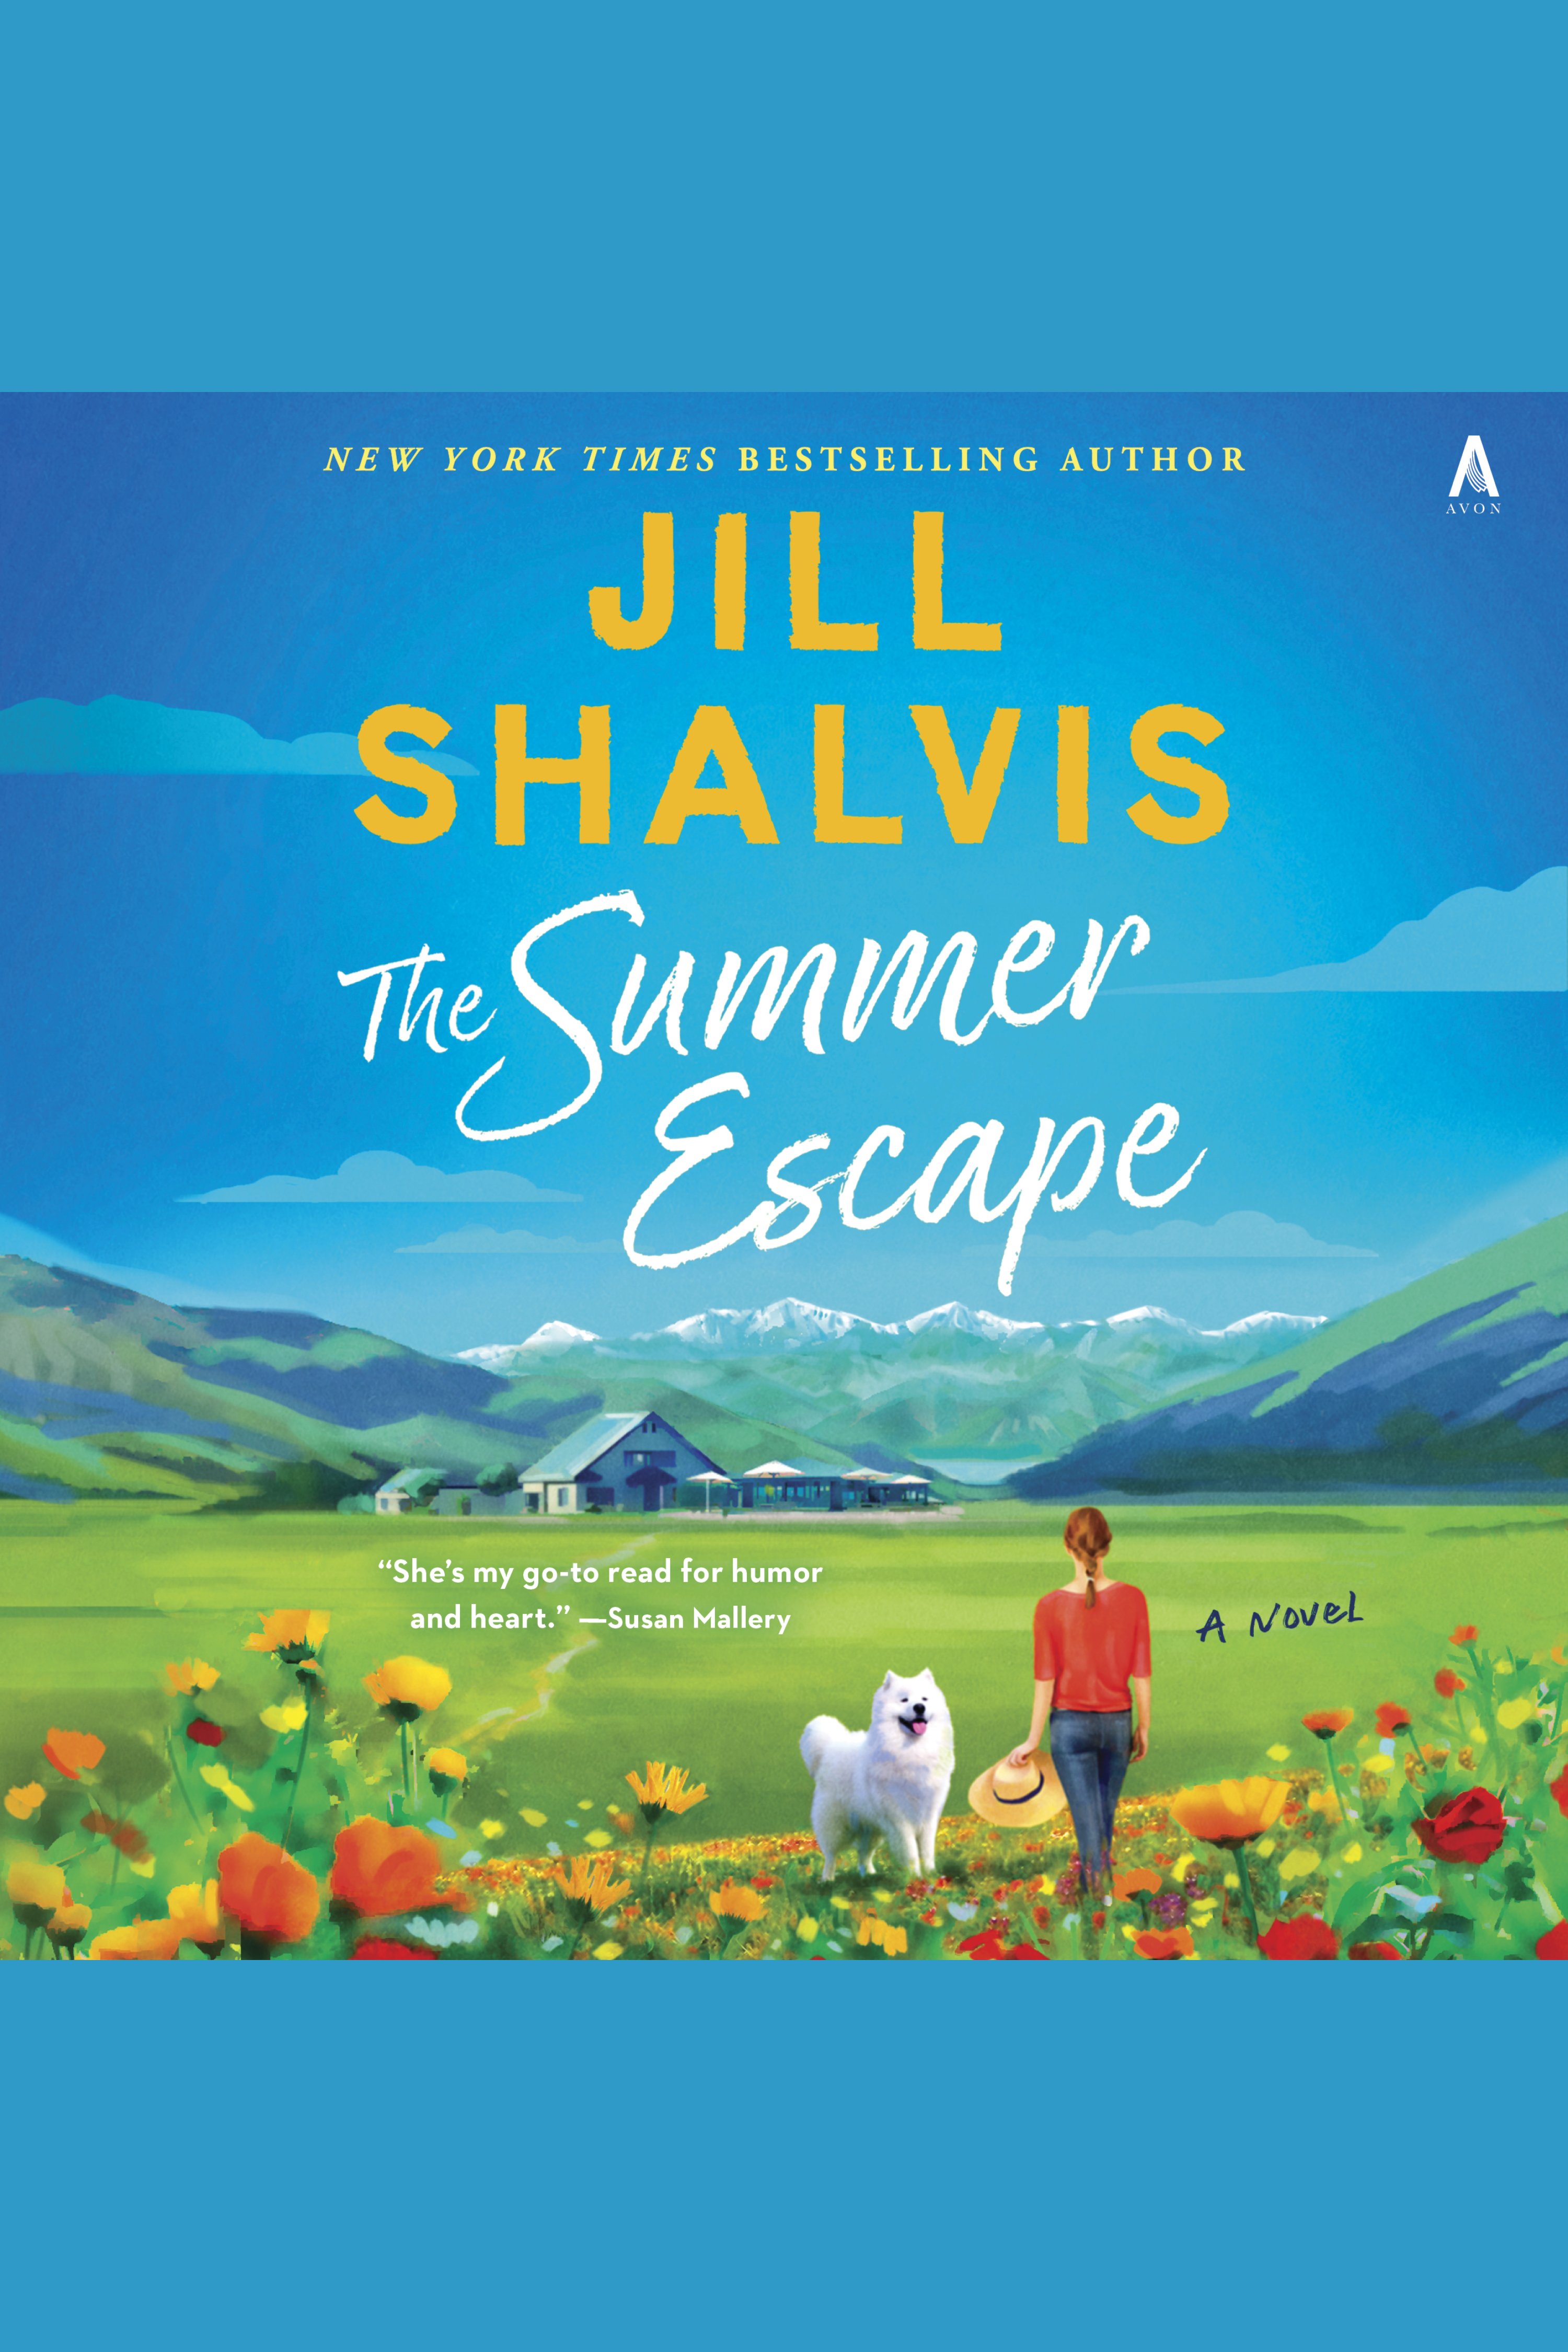 The Summer Escape cover image